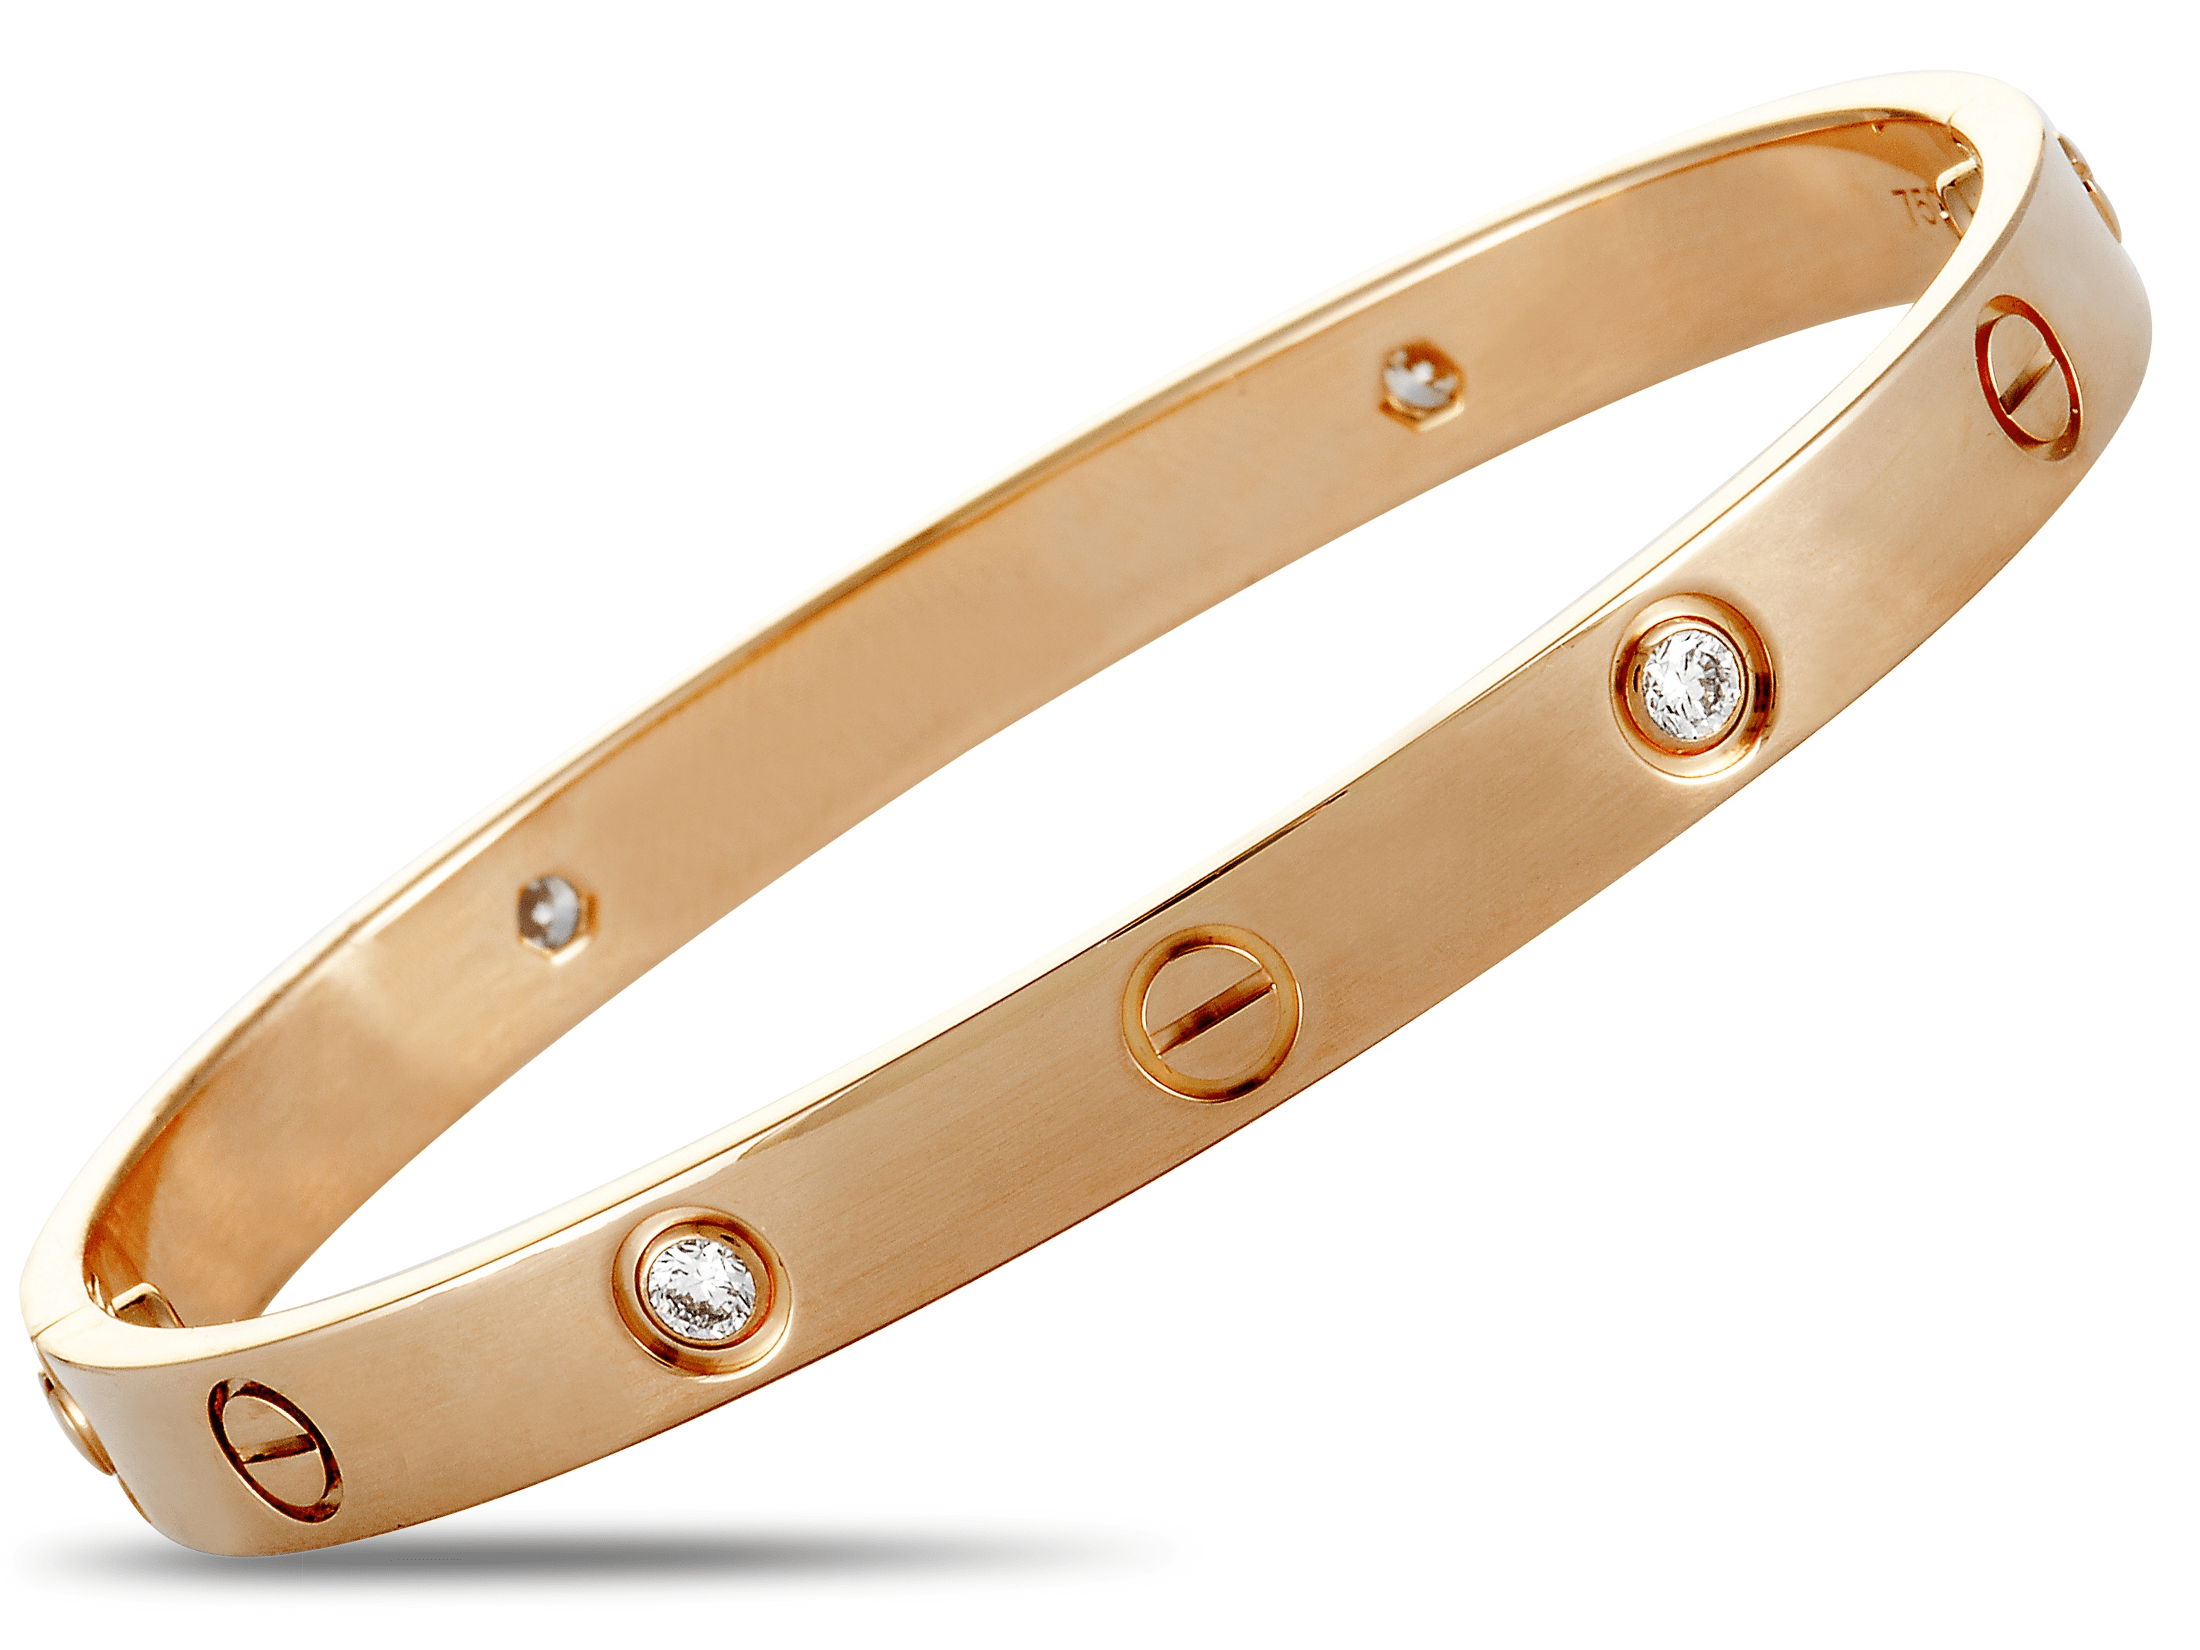 CRB6032417 - LOVE bracelet - Yellow gold - Cartier